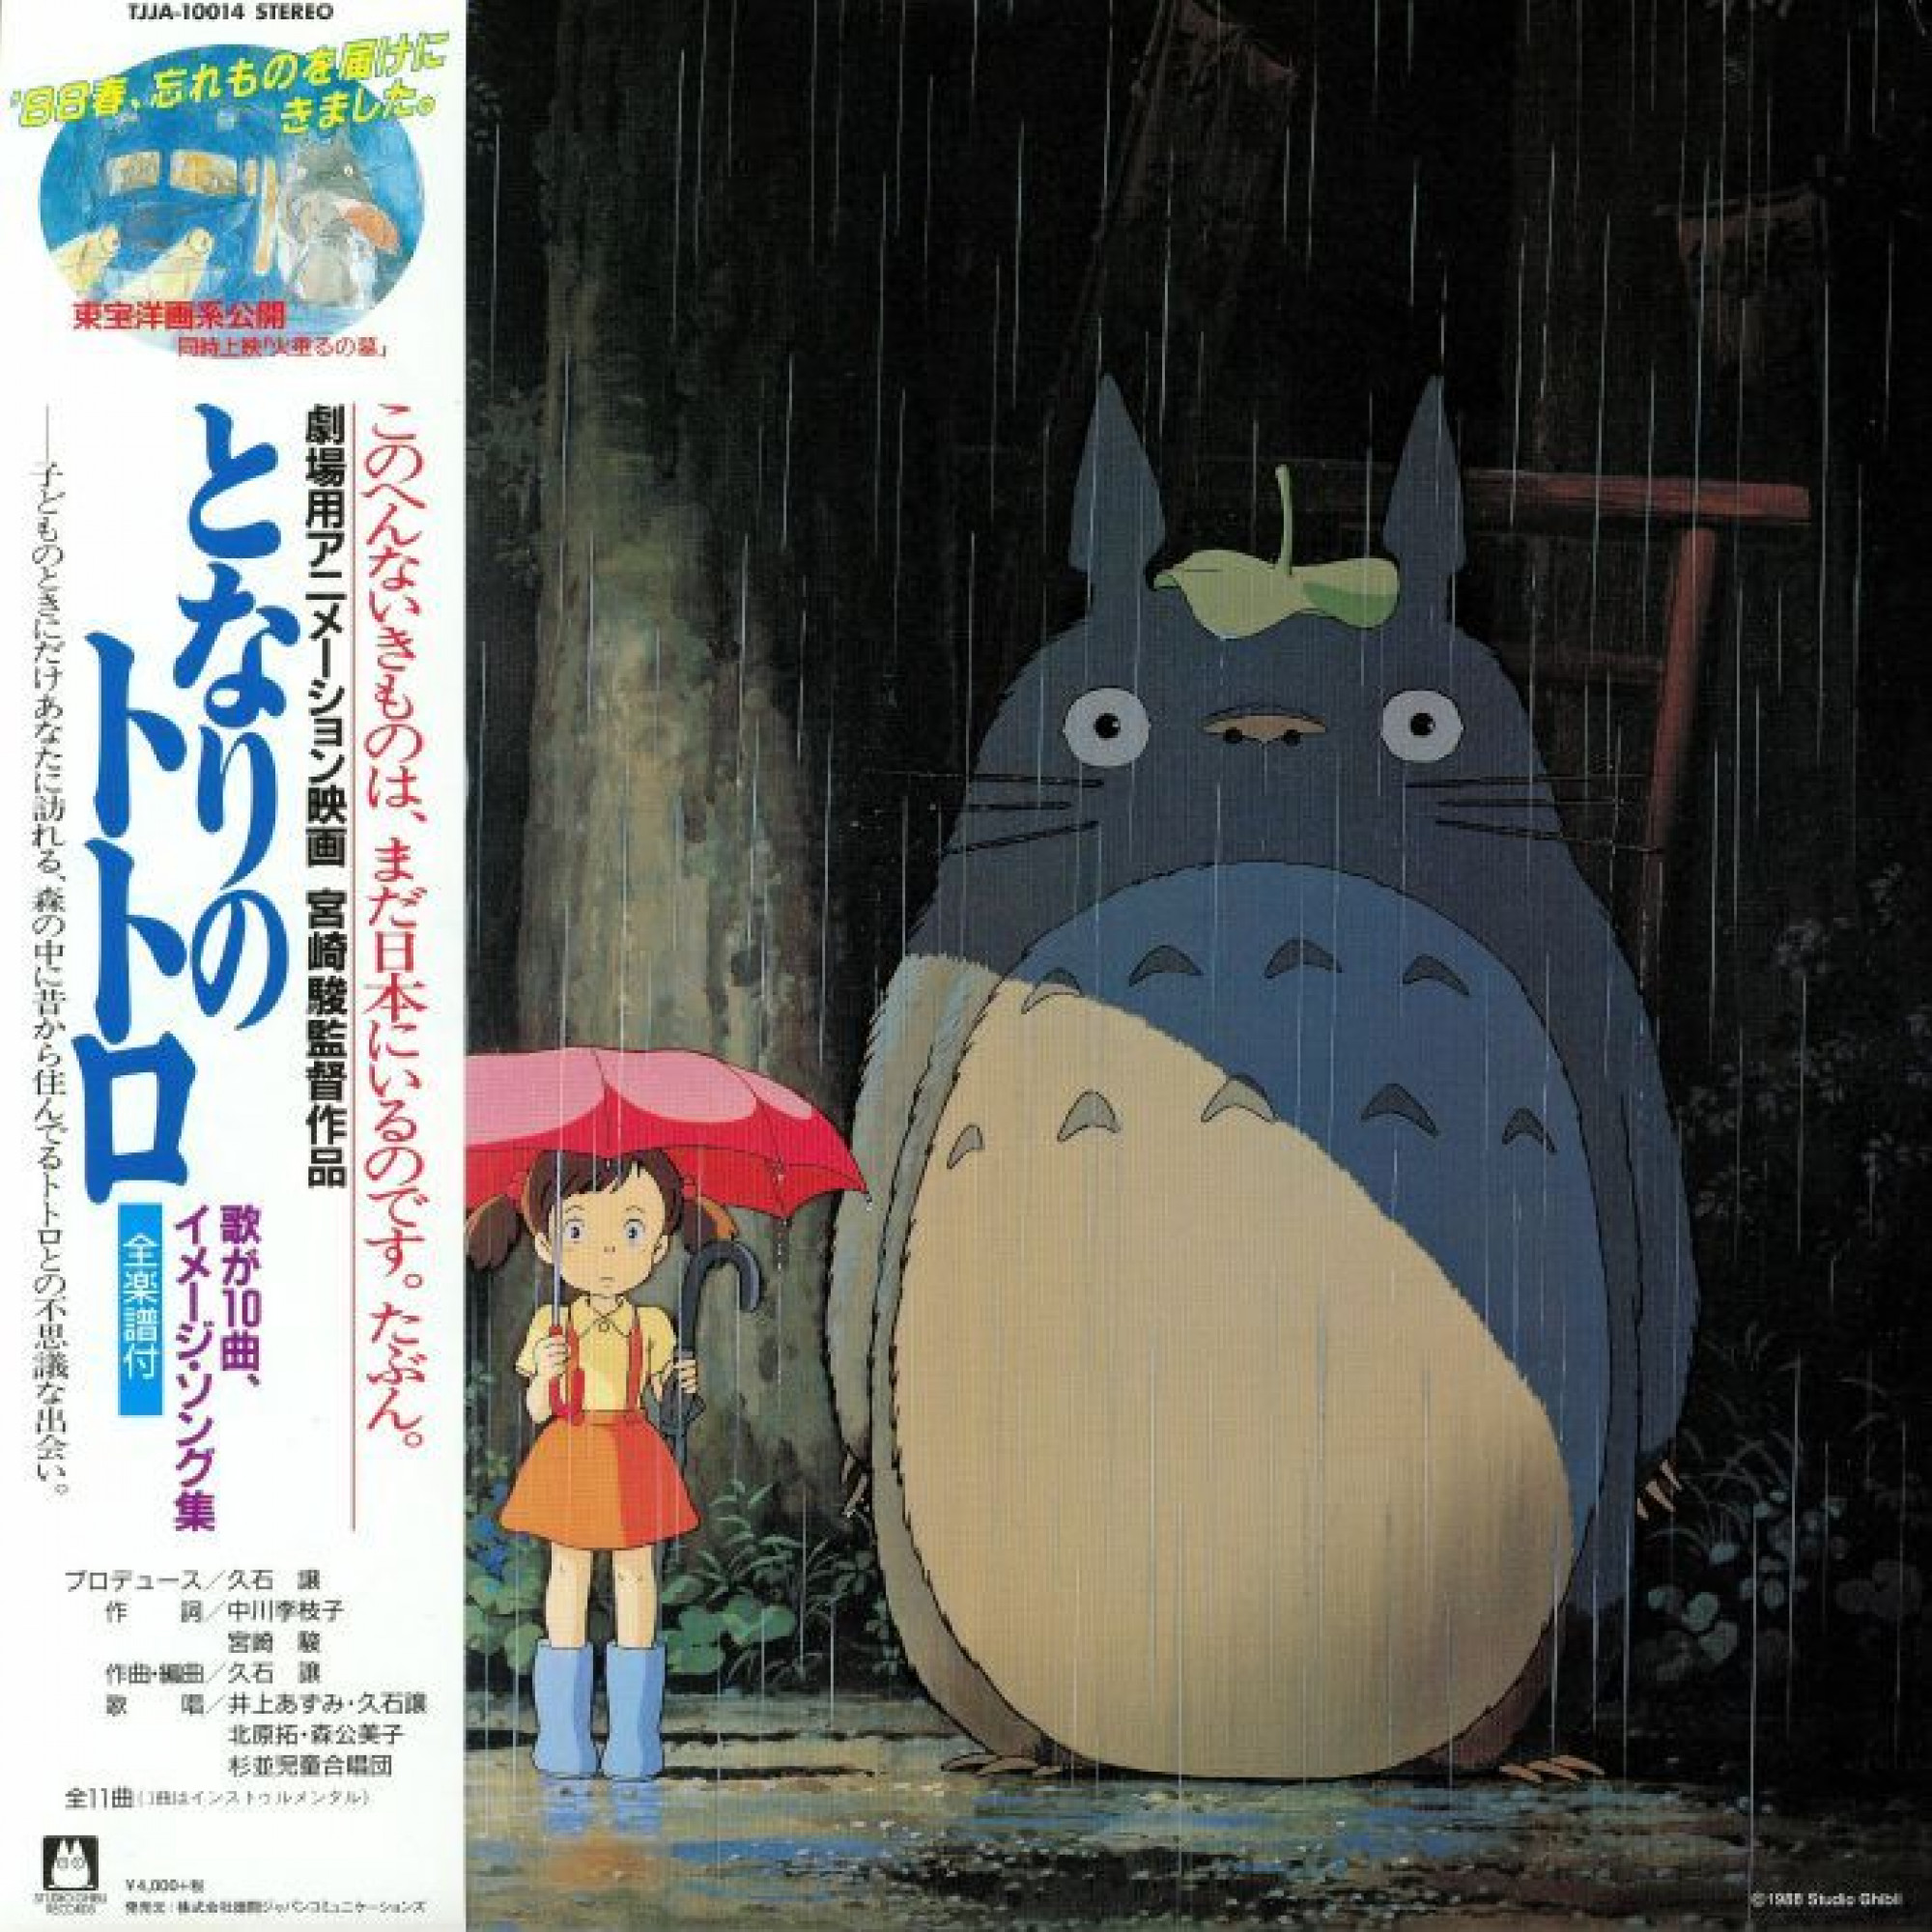 Joe Hisaishi My Neighbor Totoro Image Album — Buy Vinyl Records And Accessories In Odesa And